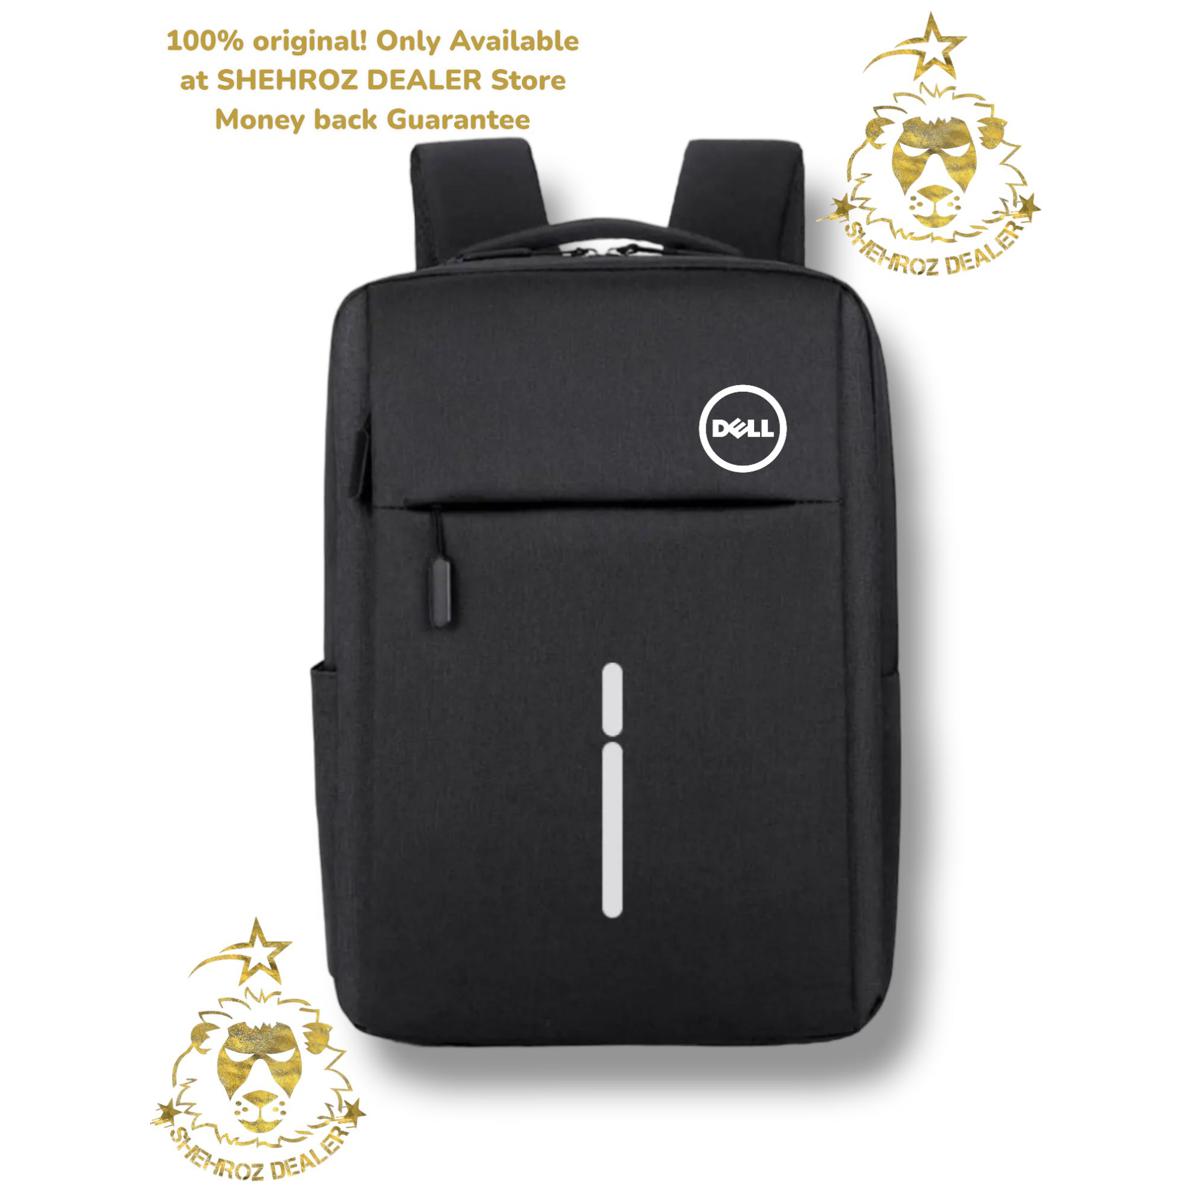 Dell Laptop Bag - GO PRICE